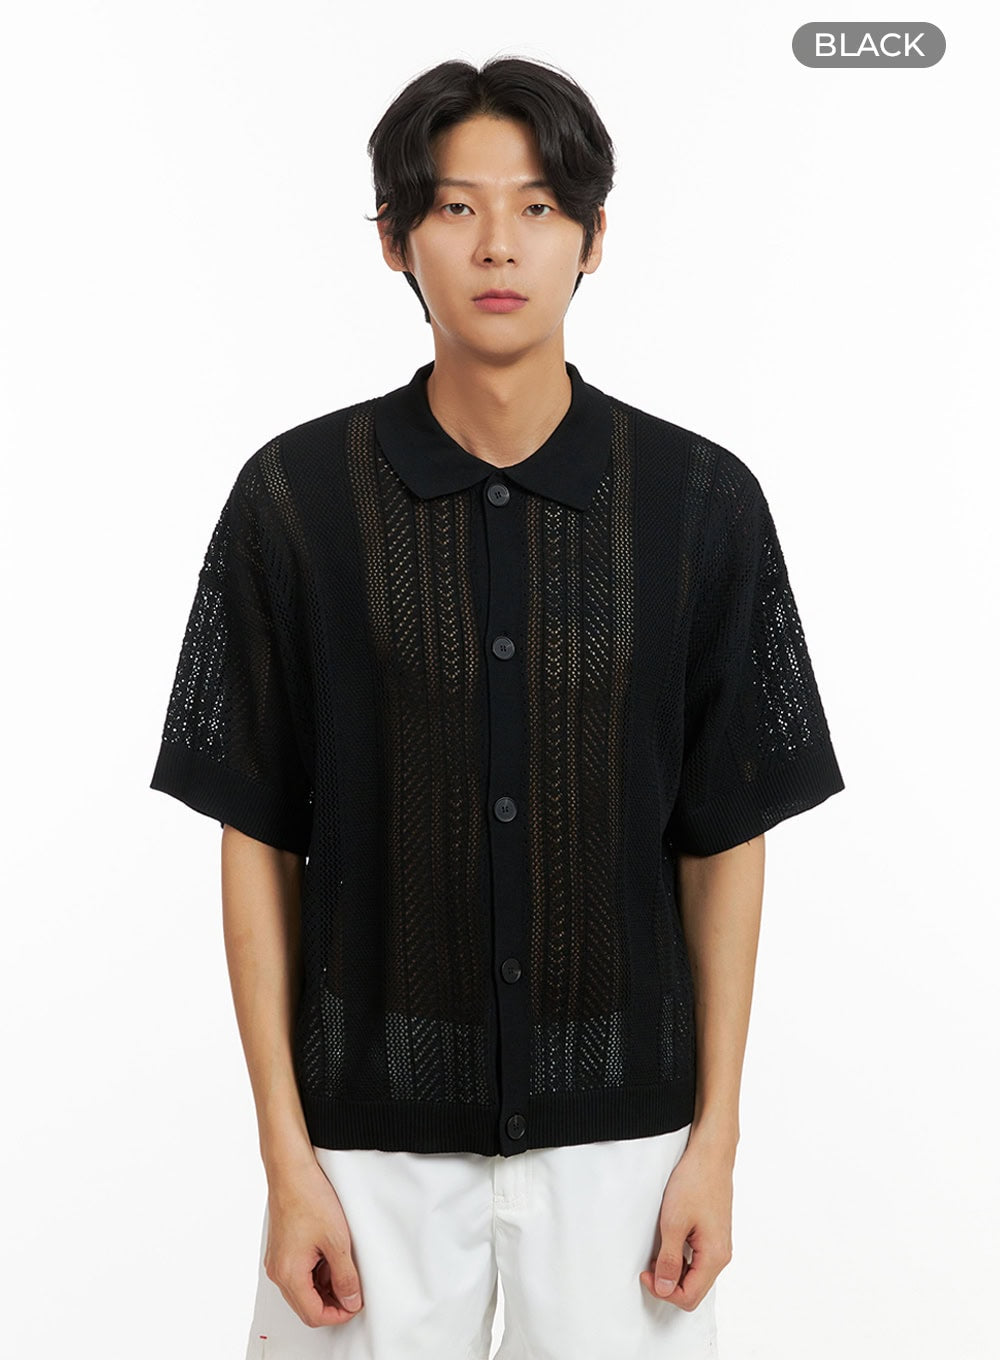 mens-short-sleeve-summer-knit-button-up-top-iy416 / Black